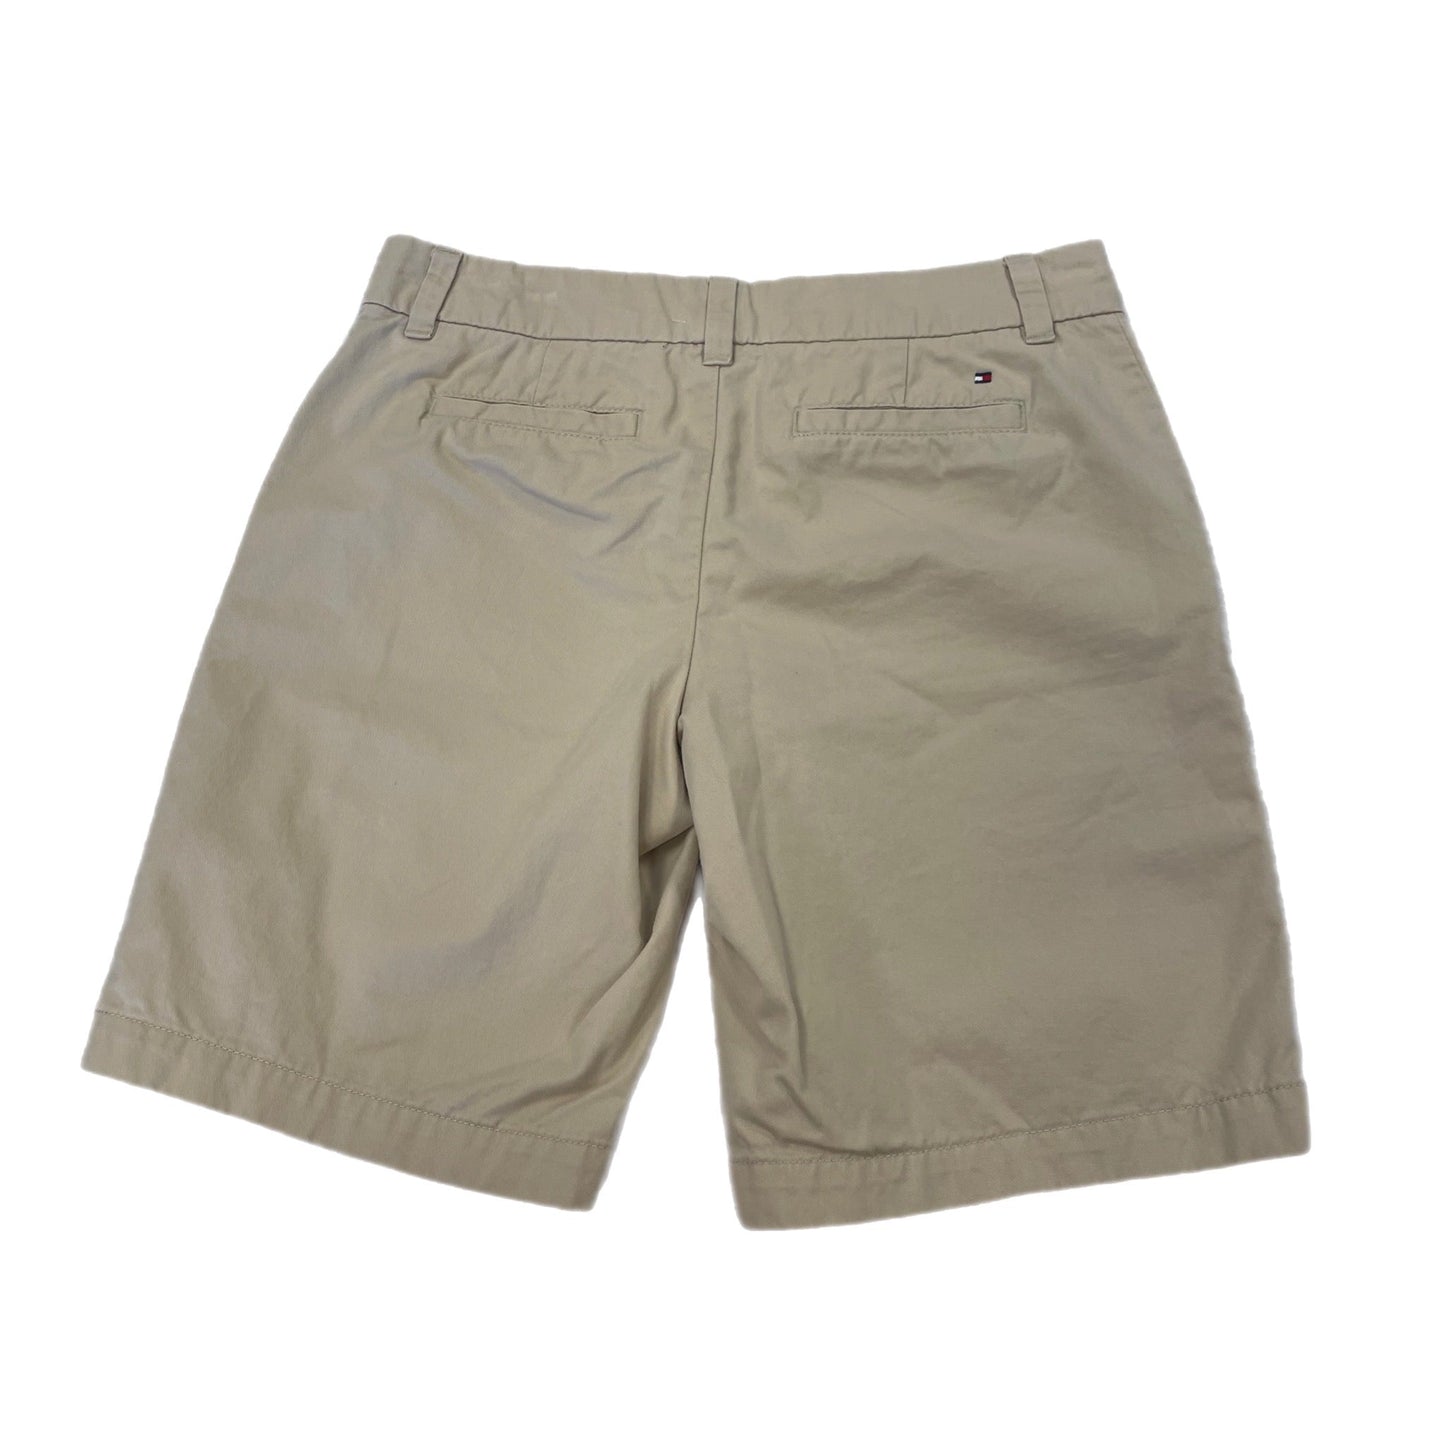 Shorts By Tommy Hilfiger  Size: 4